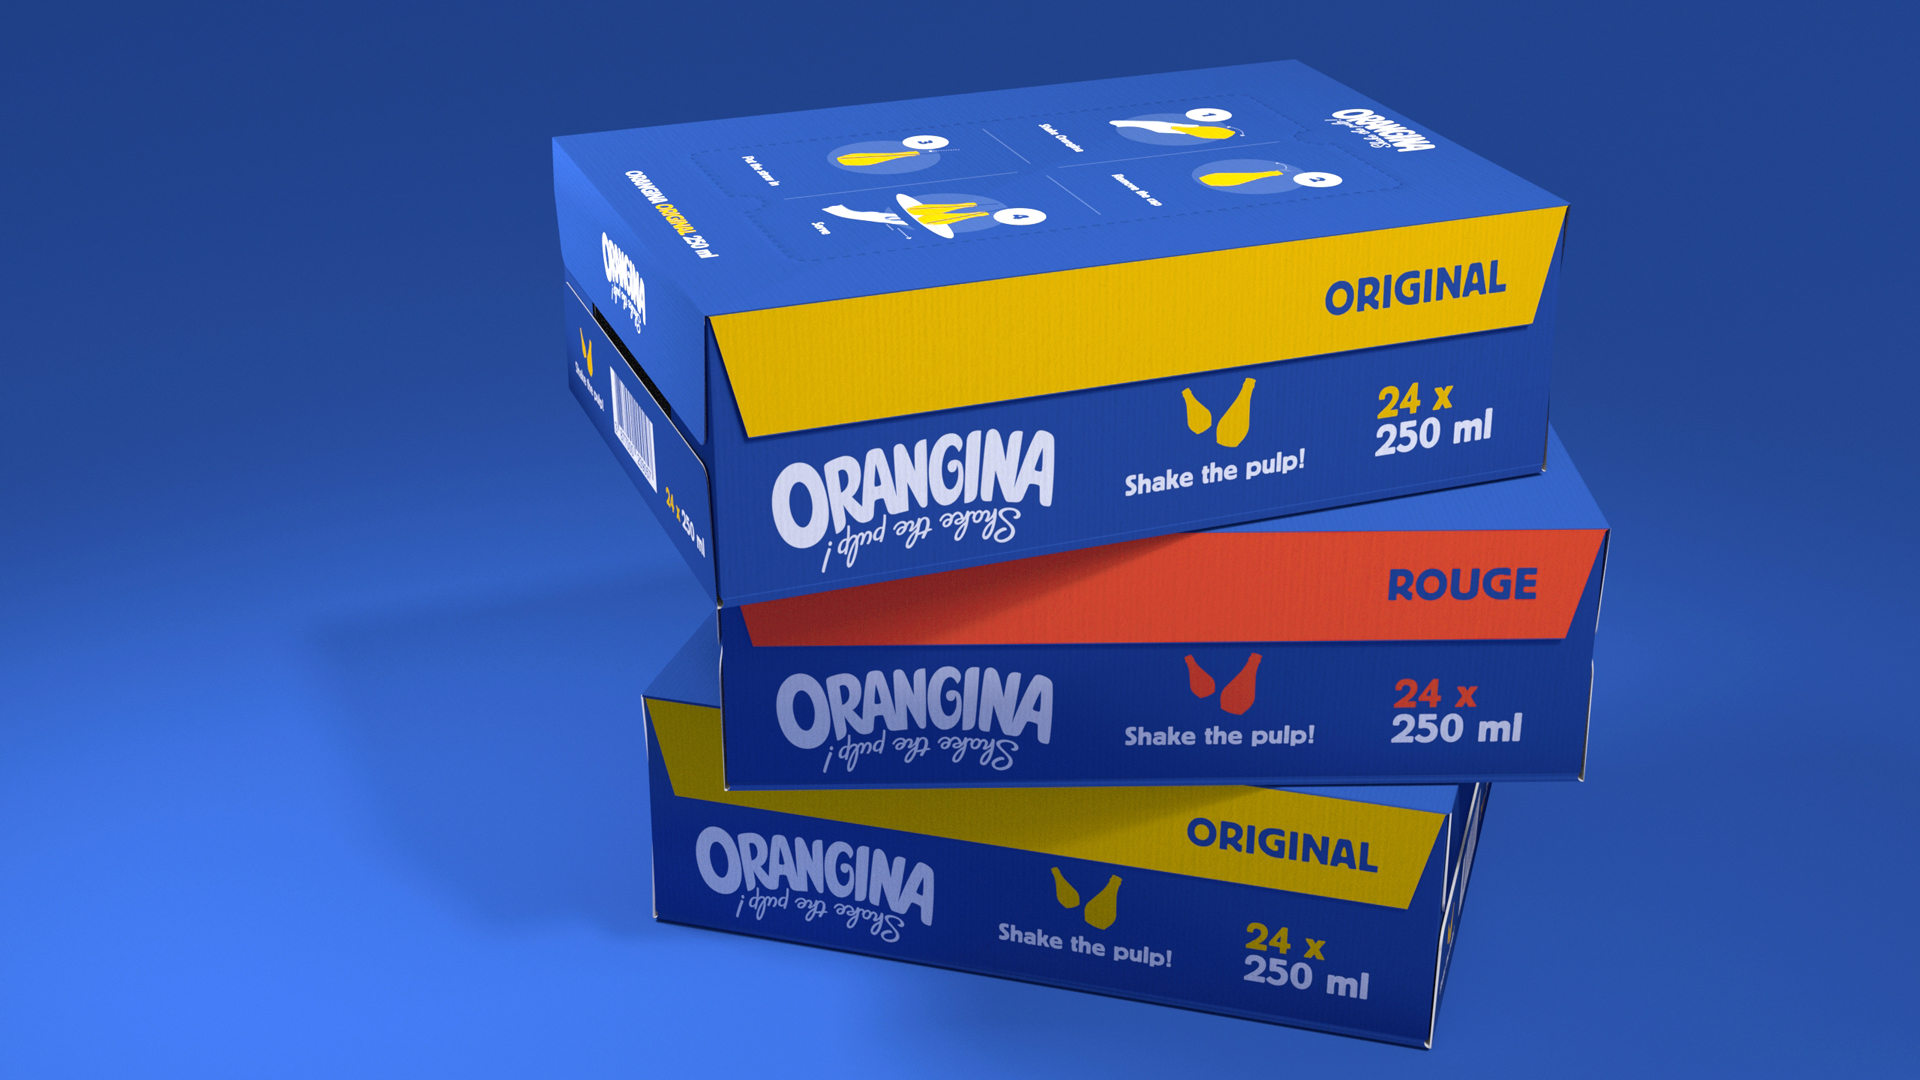 Orangina-Transport-Packaging-by-Emtisquare-11